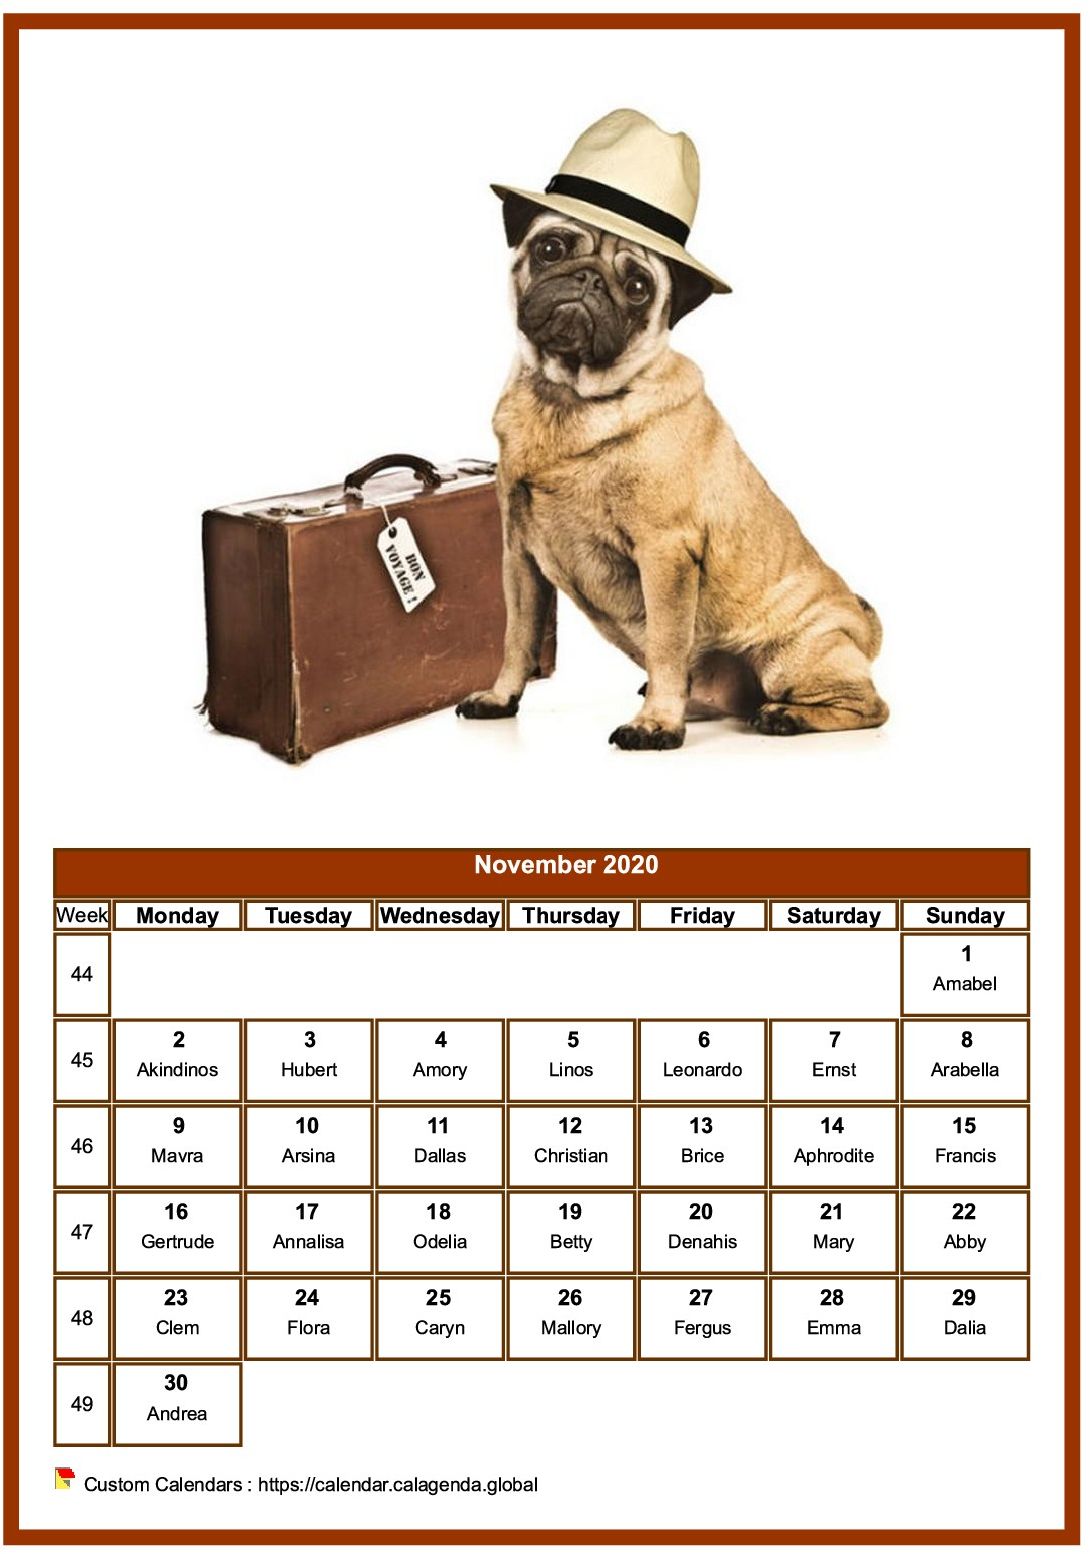 Calendar November 2020 dogs